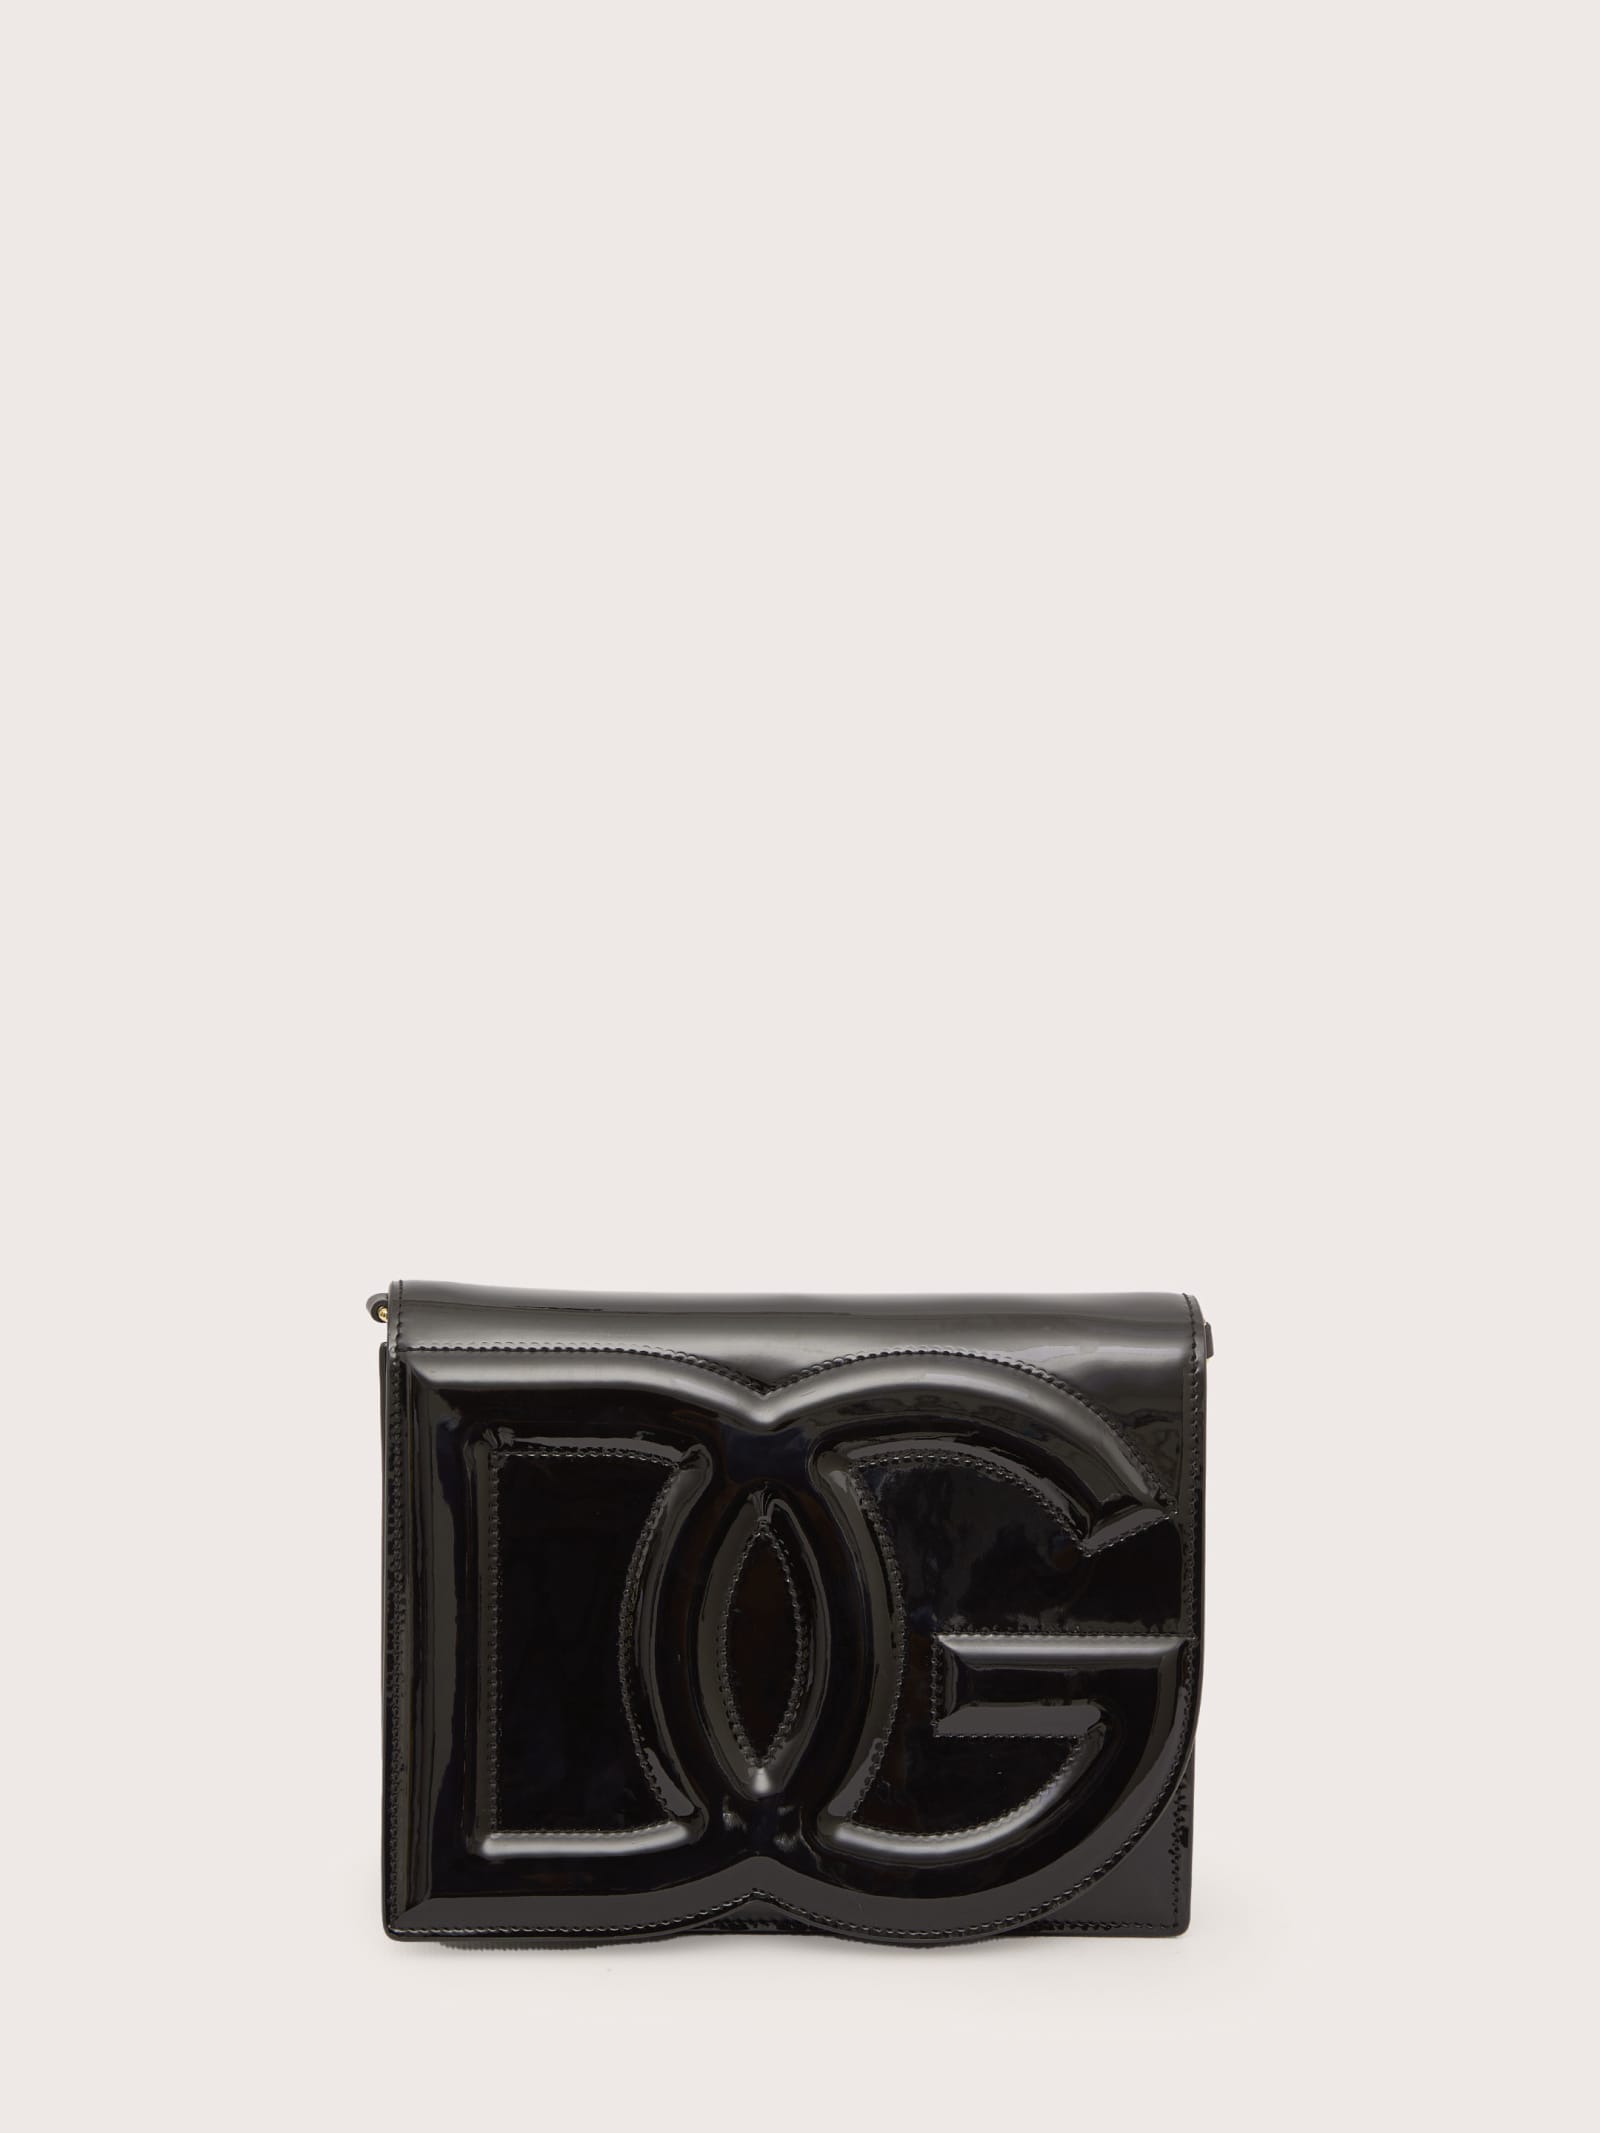 Dolce & Gabbana Black Patent Leather Bag